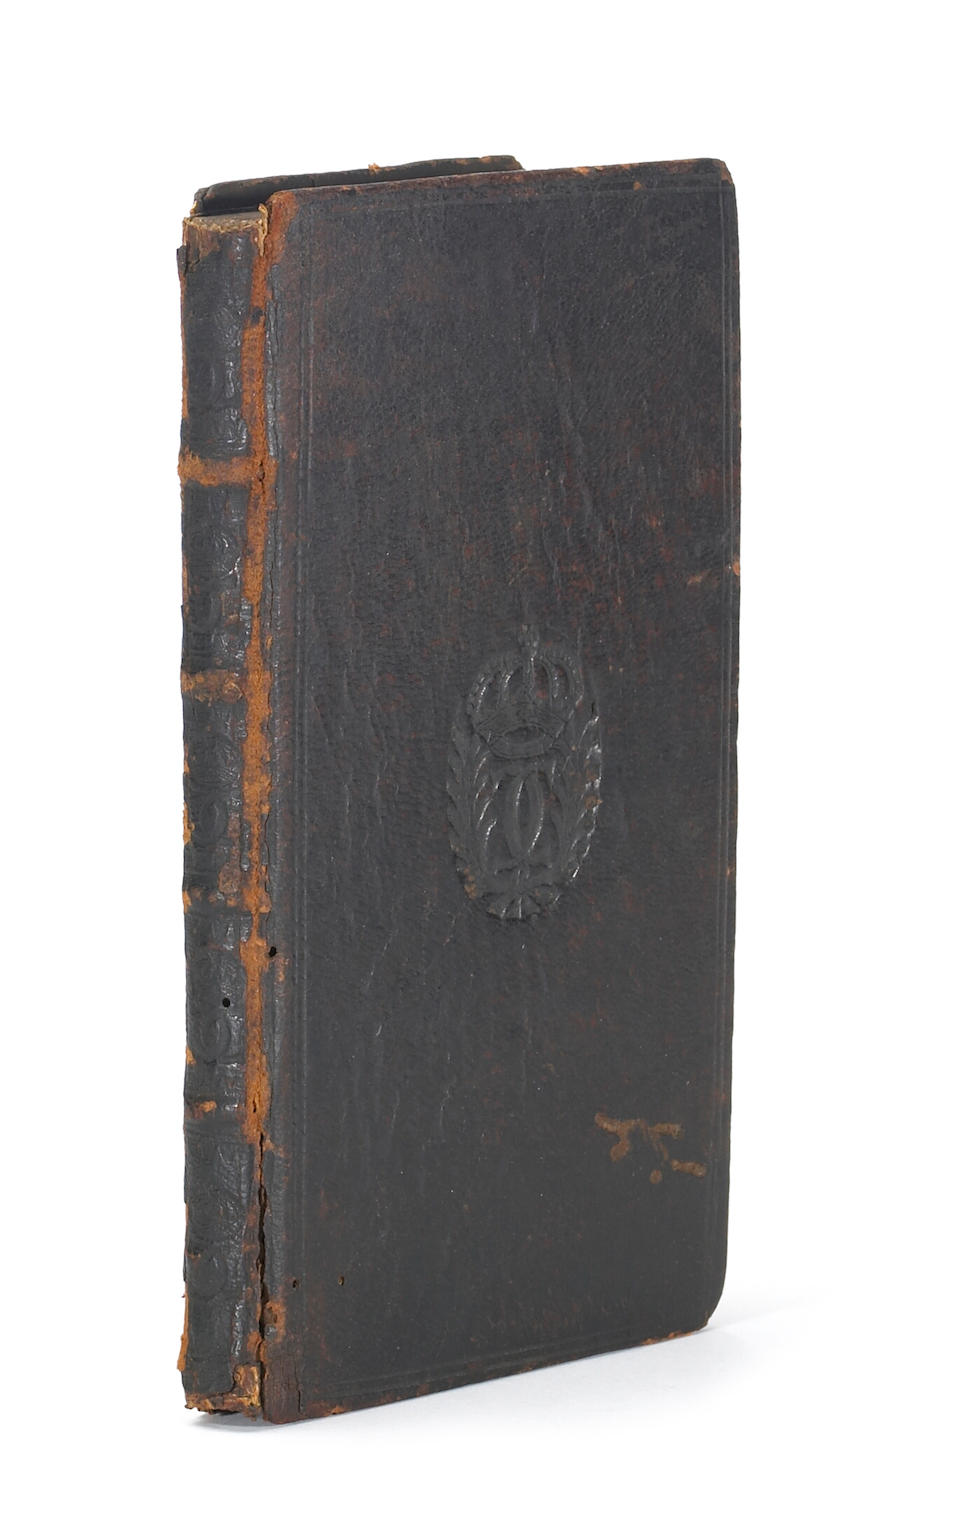 CAMPANIUS HOLM, JOHAN, translator. 1601-1683. Lutheri catechismus ofwersatt pa American-Virginiske Spraket. Stockholm: J.J. Genath, 1696.